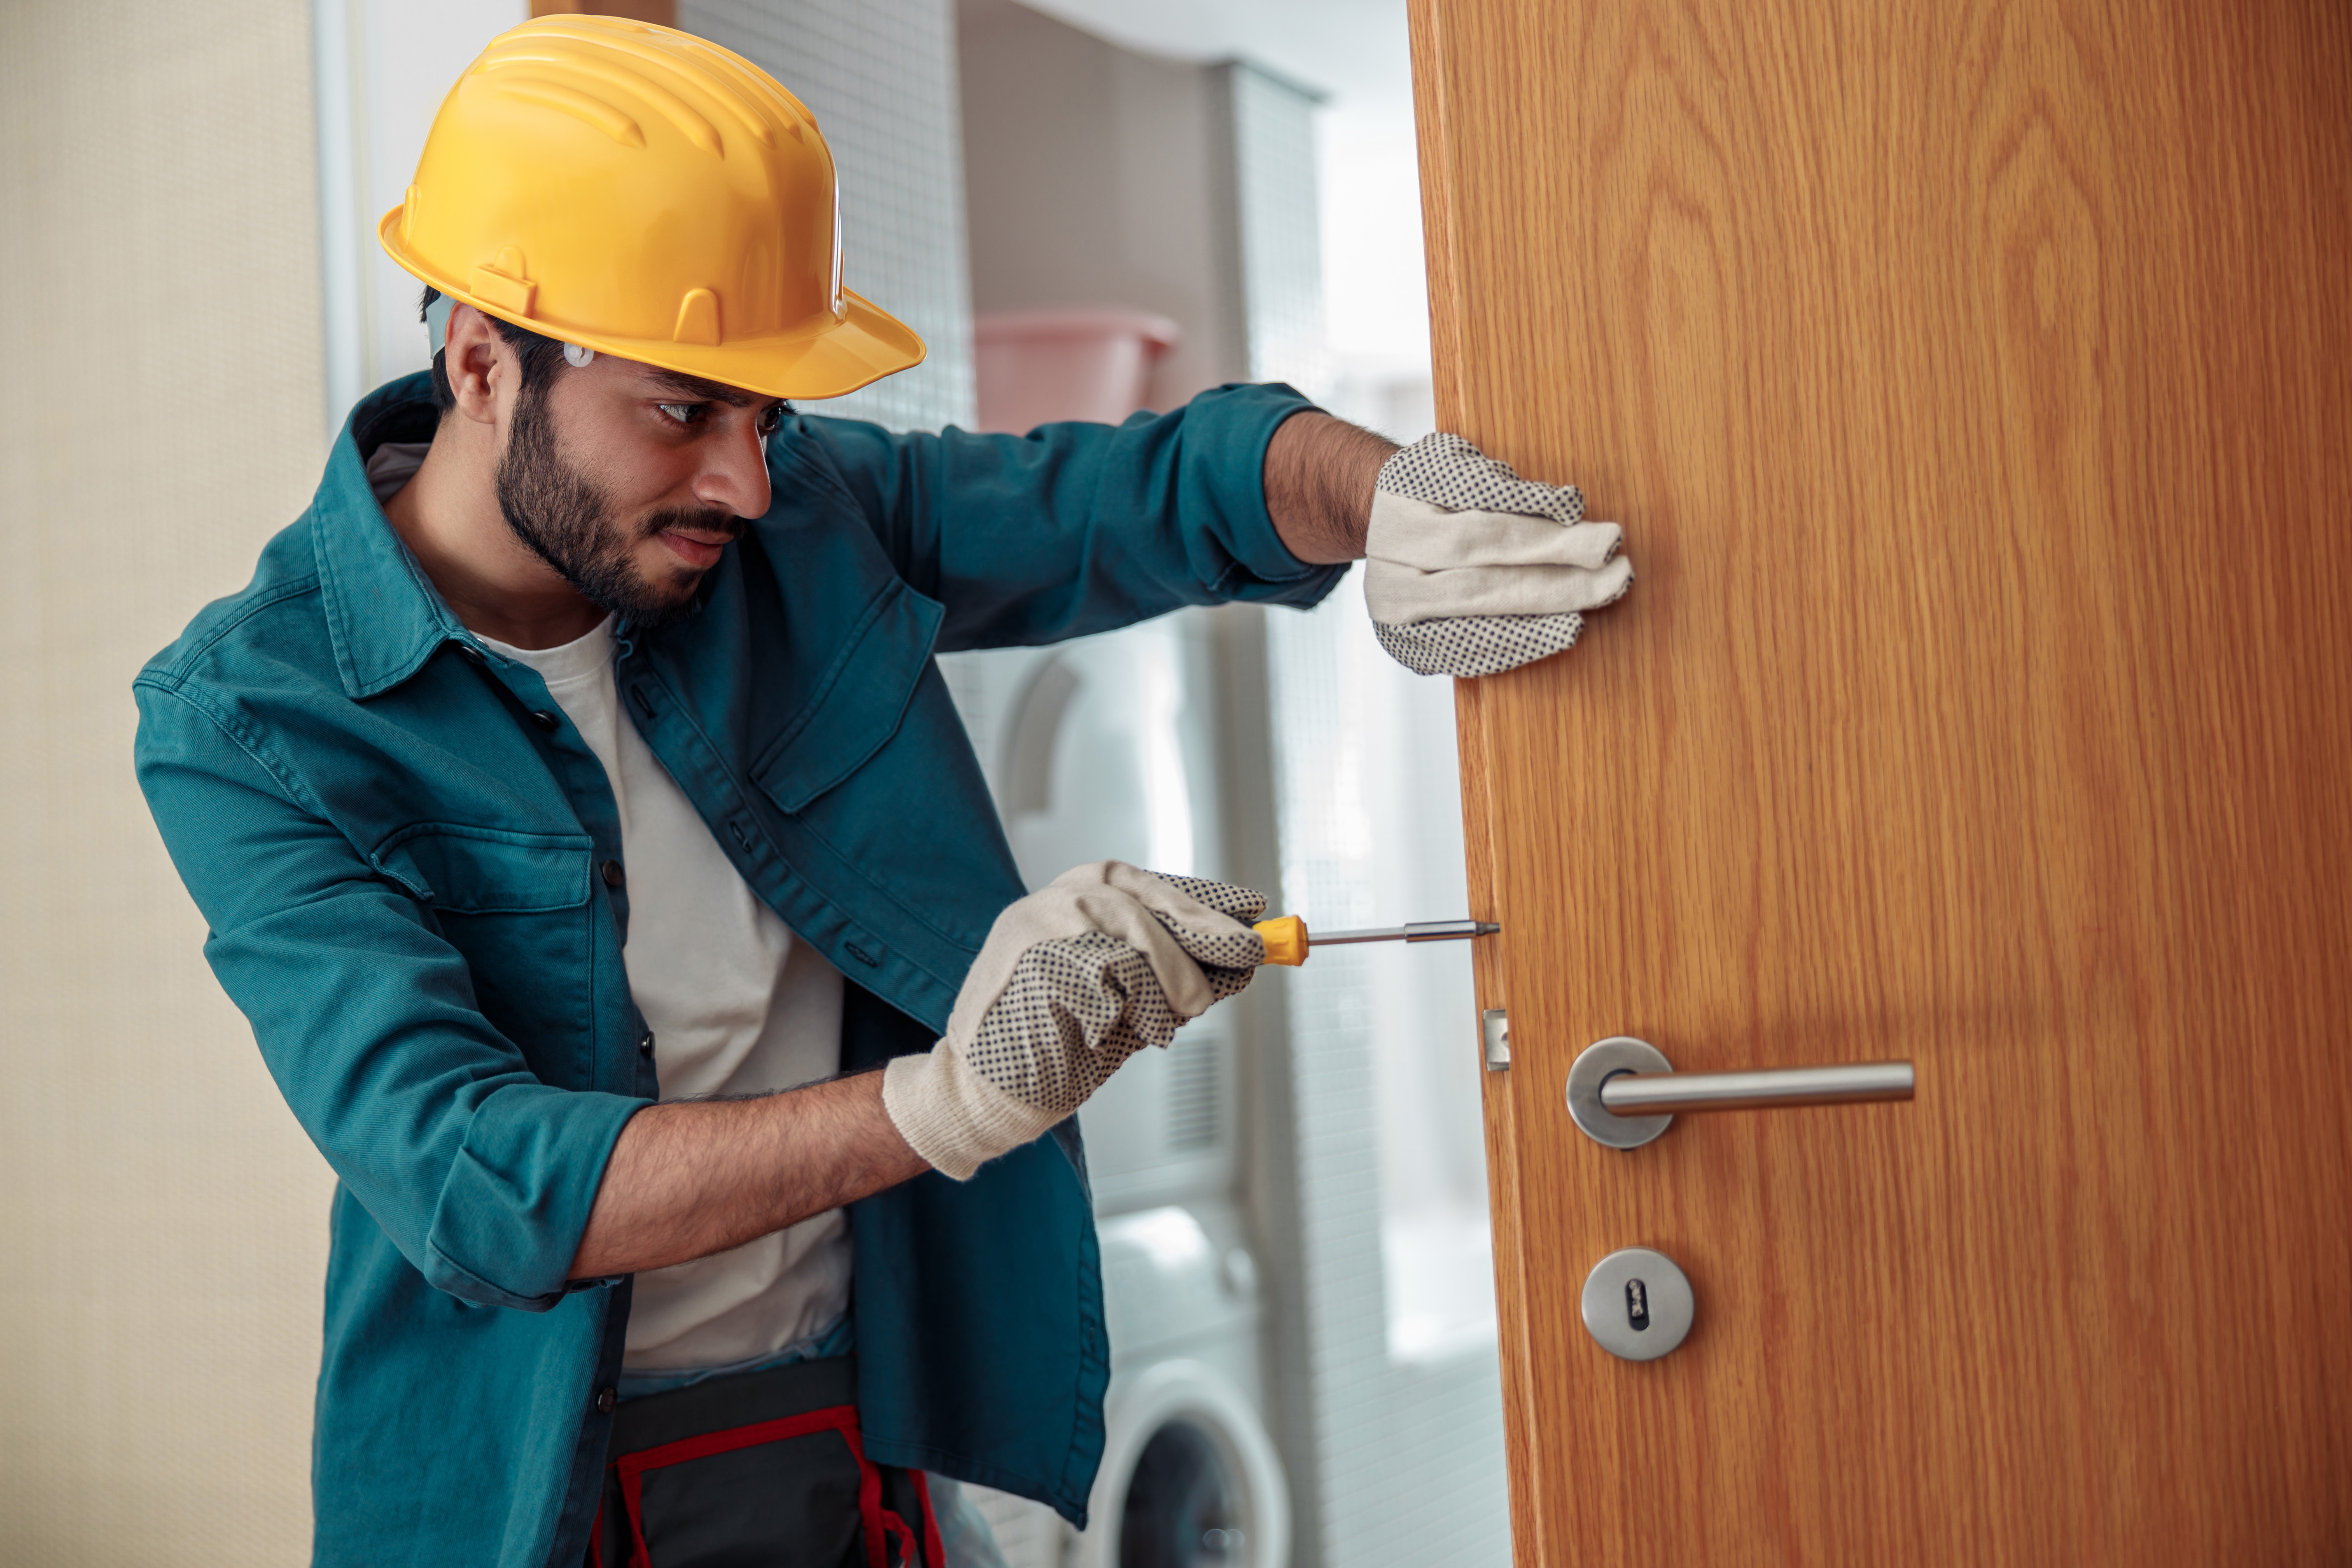 locksmith-workman-in-uniform-installing-door-knob-2023-01-05-00-20-11-utc.jpg